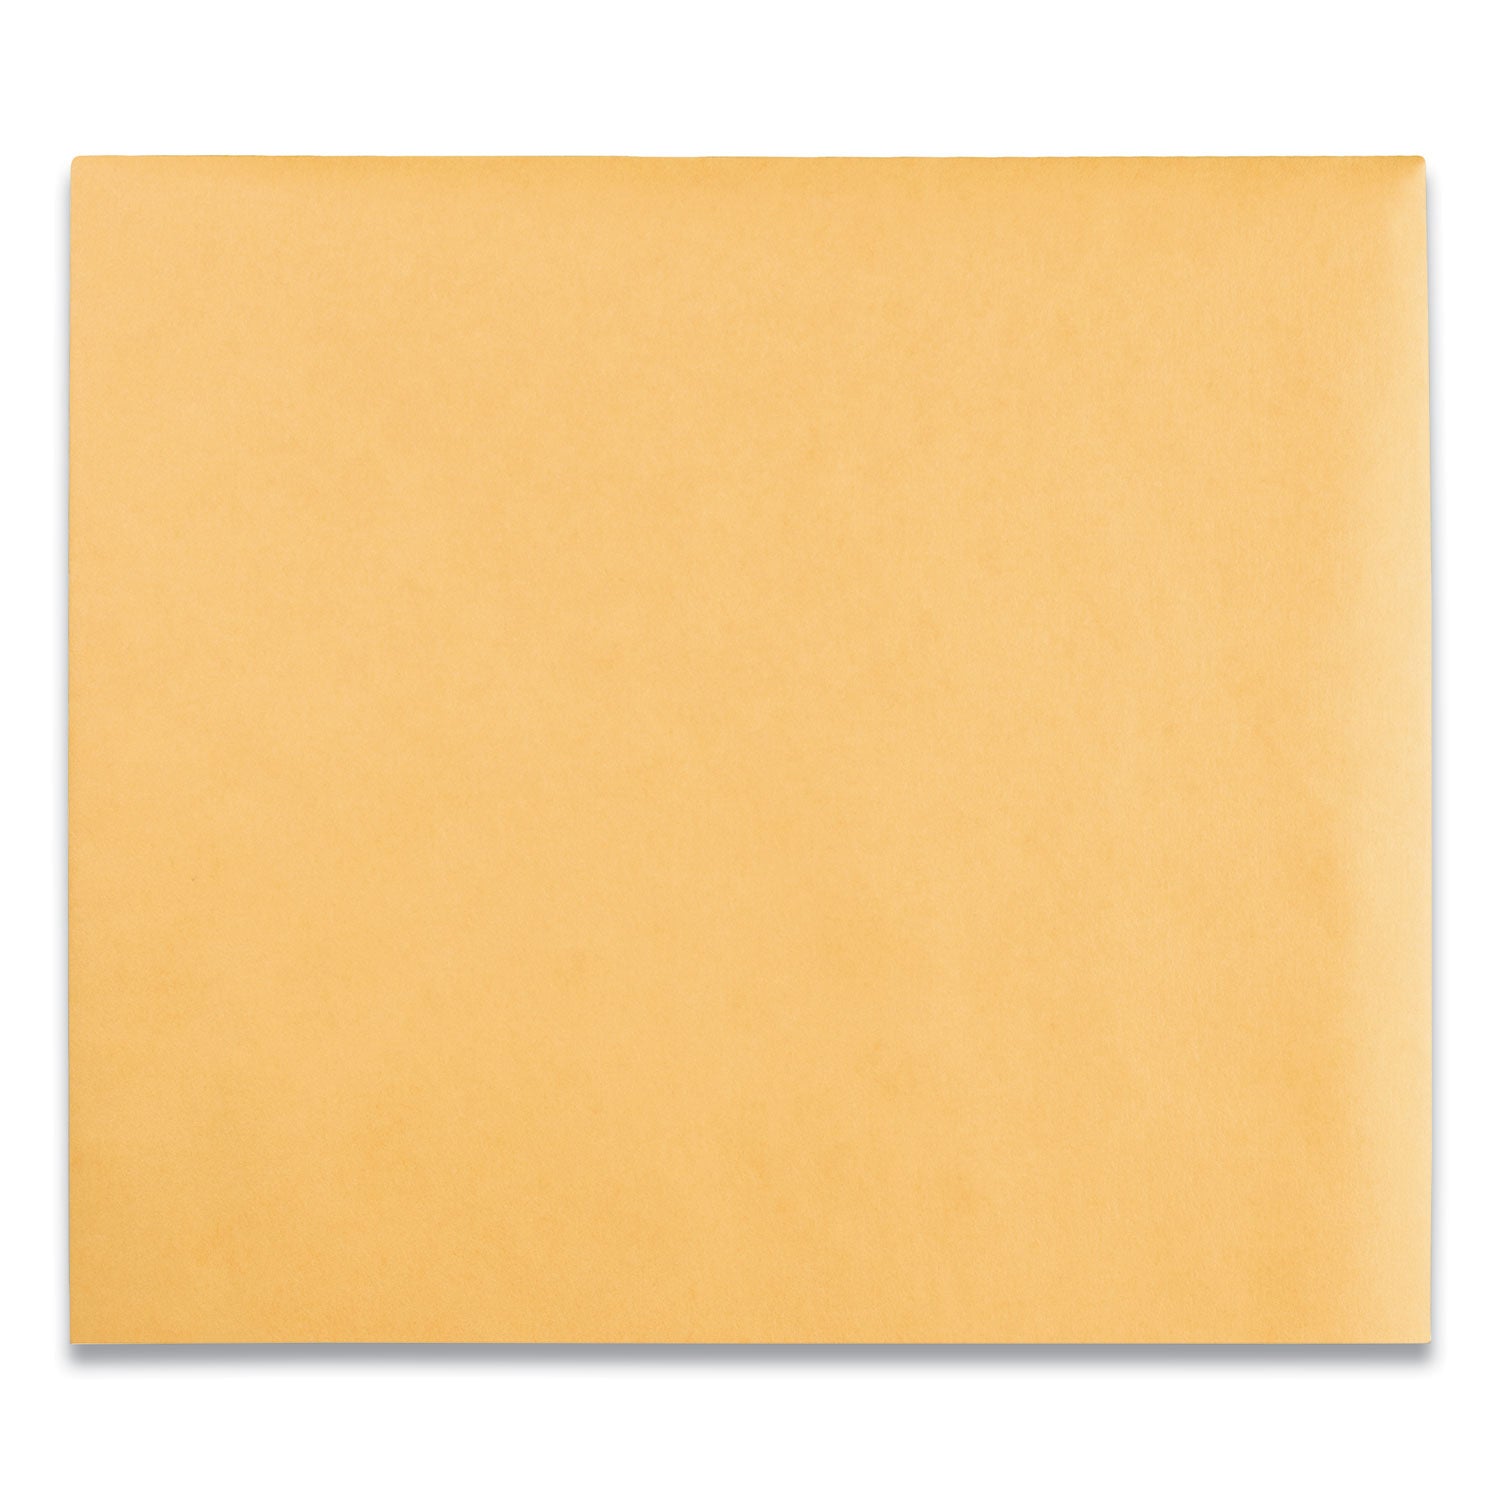 Clasp Envelope, 28 lb Bond Weight Kraft, #95, Square Flap, Clasp/Gummed Closure, 10 x 12, Brown Kraft, 100/Box - 